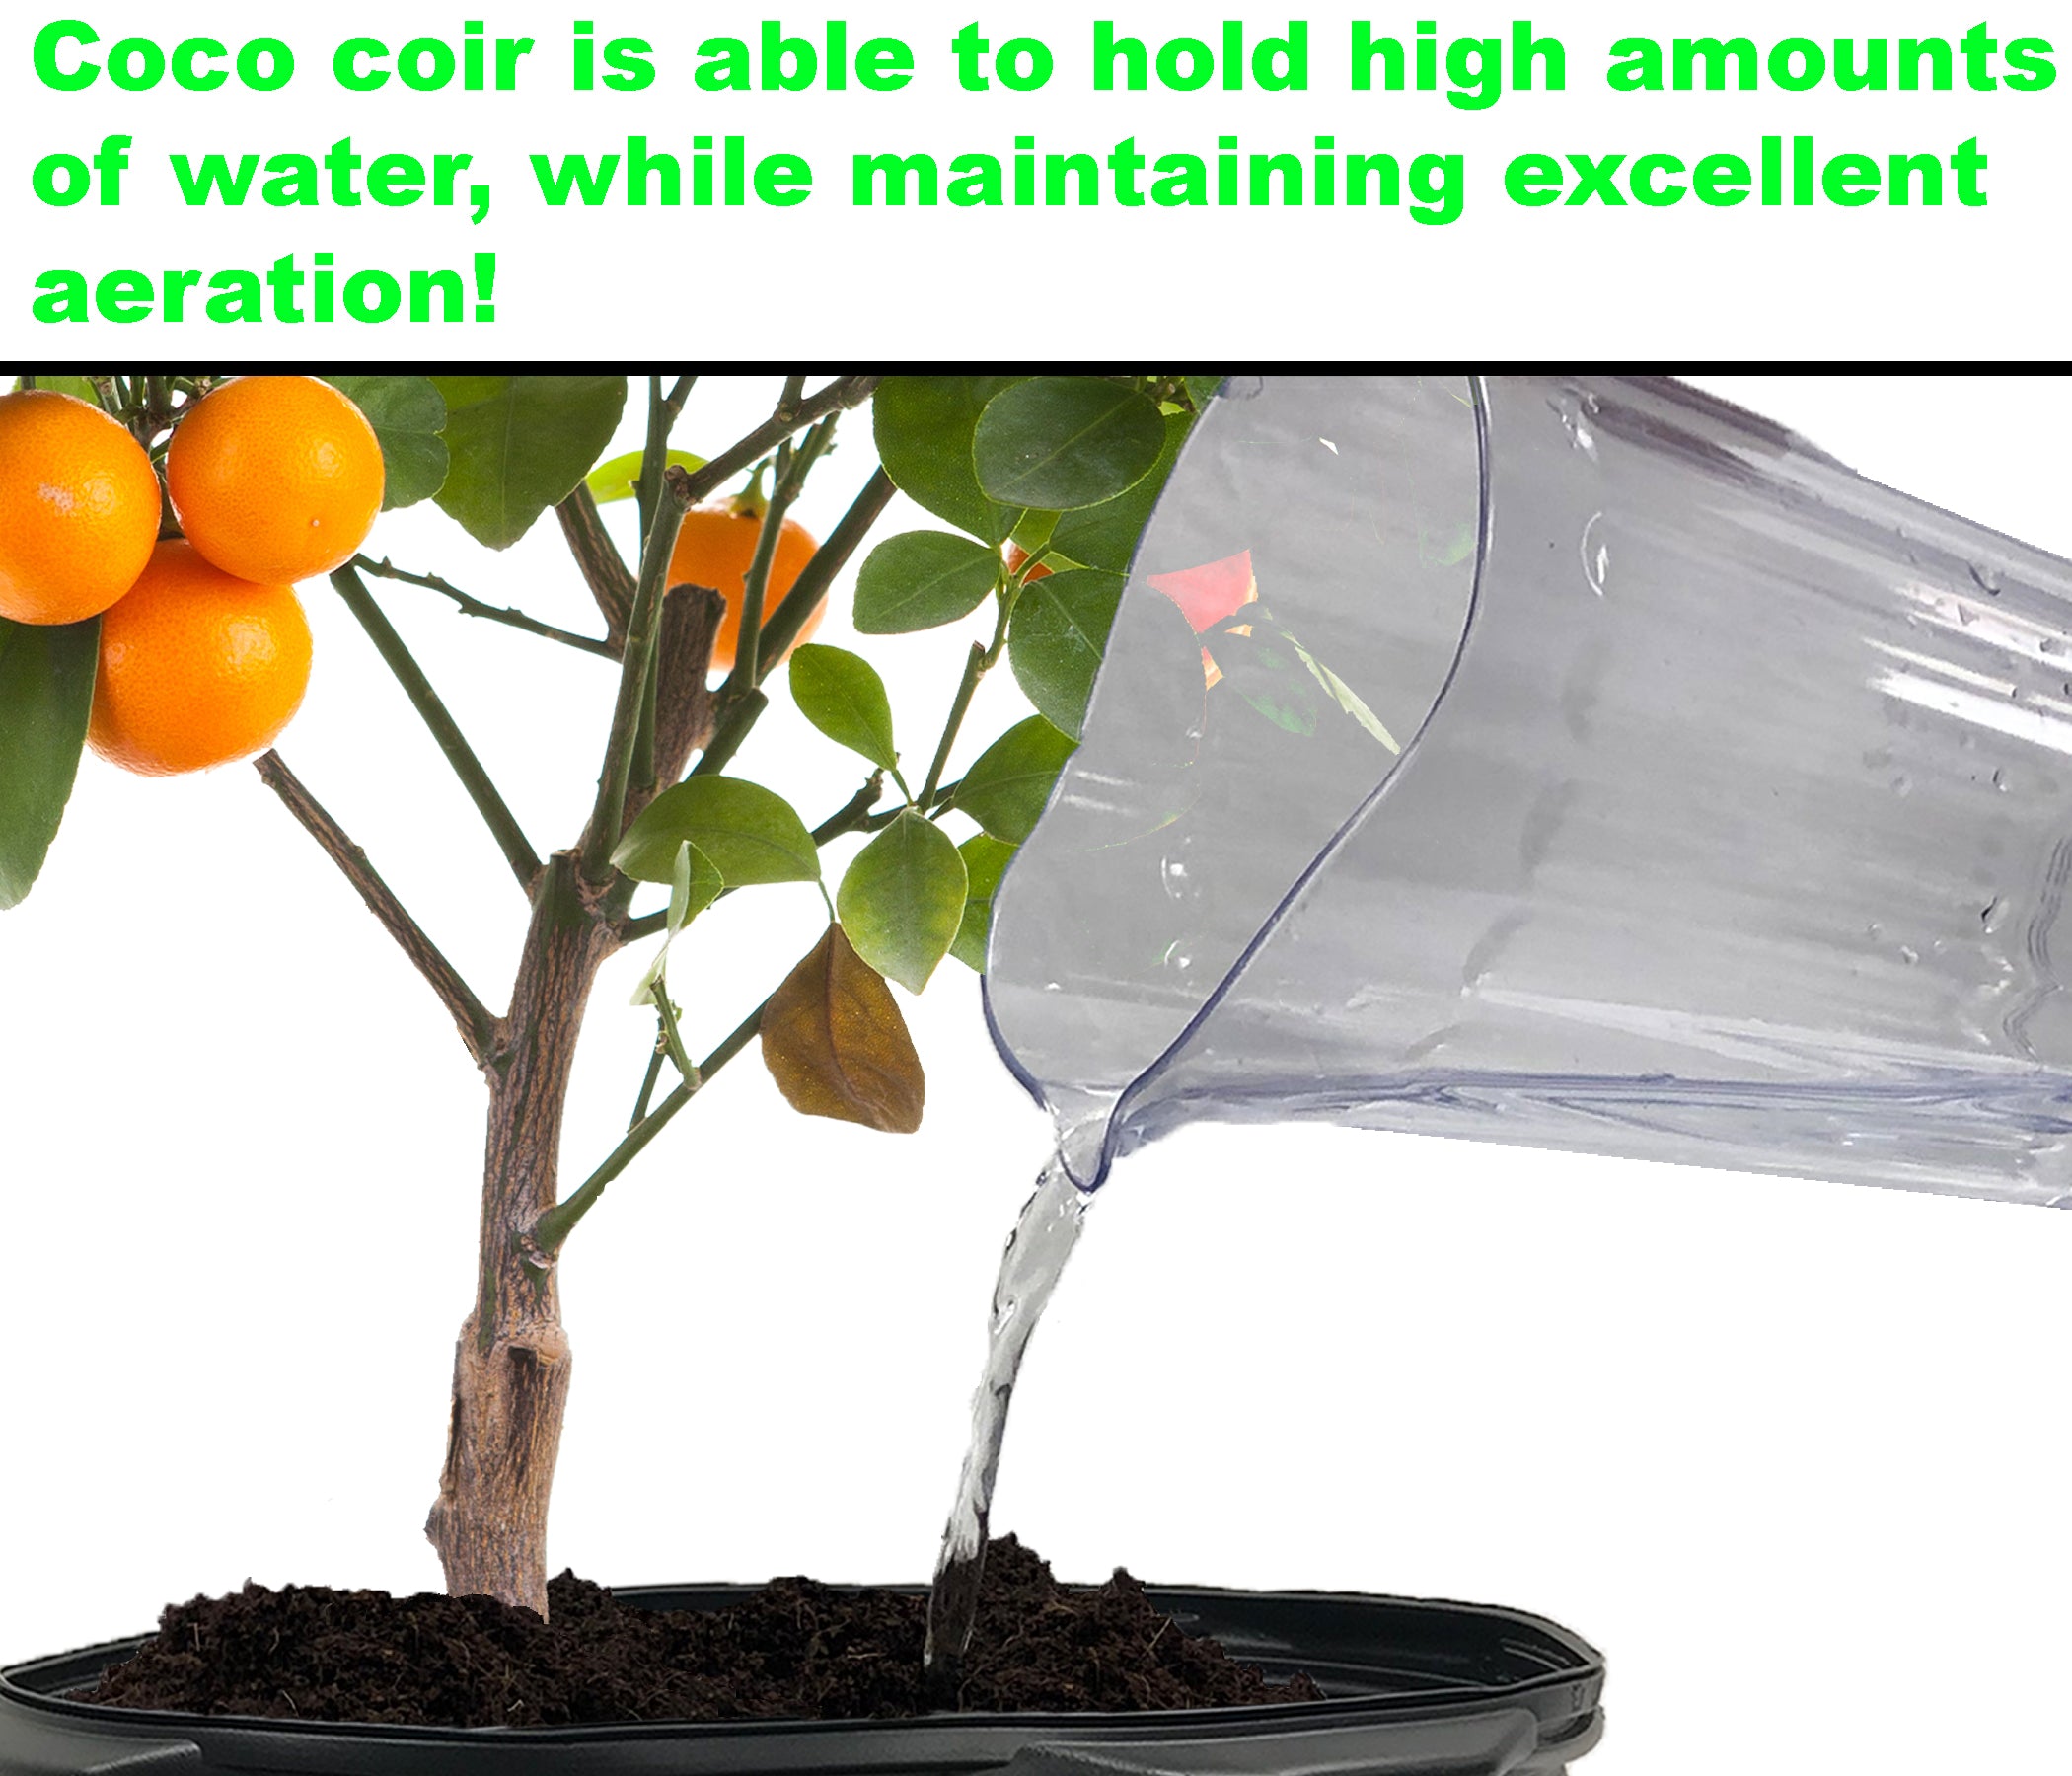 ViaGrow 1.5 cu. ft. Bolsa de medio de cultivo sin suelo de fibra de coco (paleta de 65 bolsas)